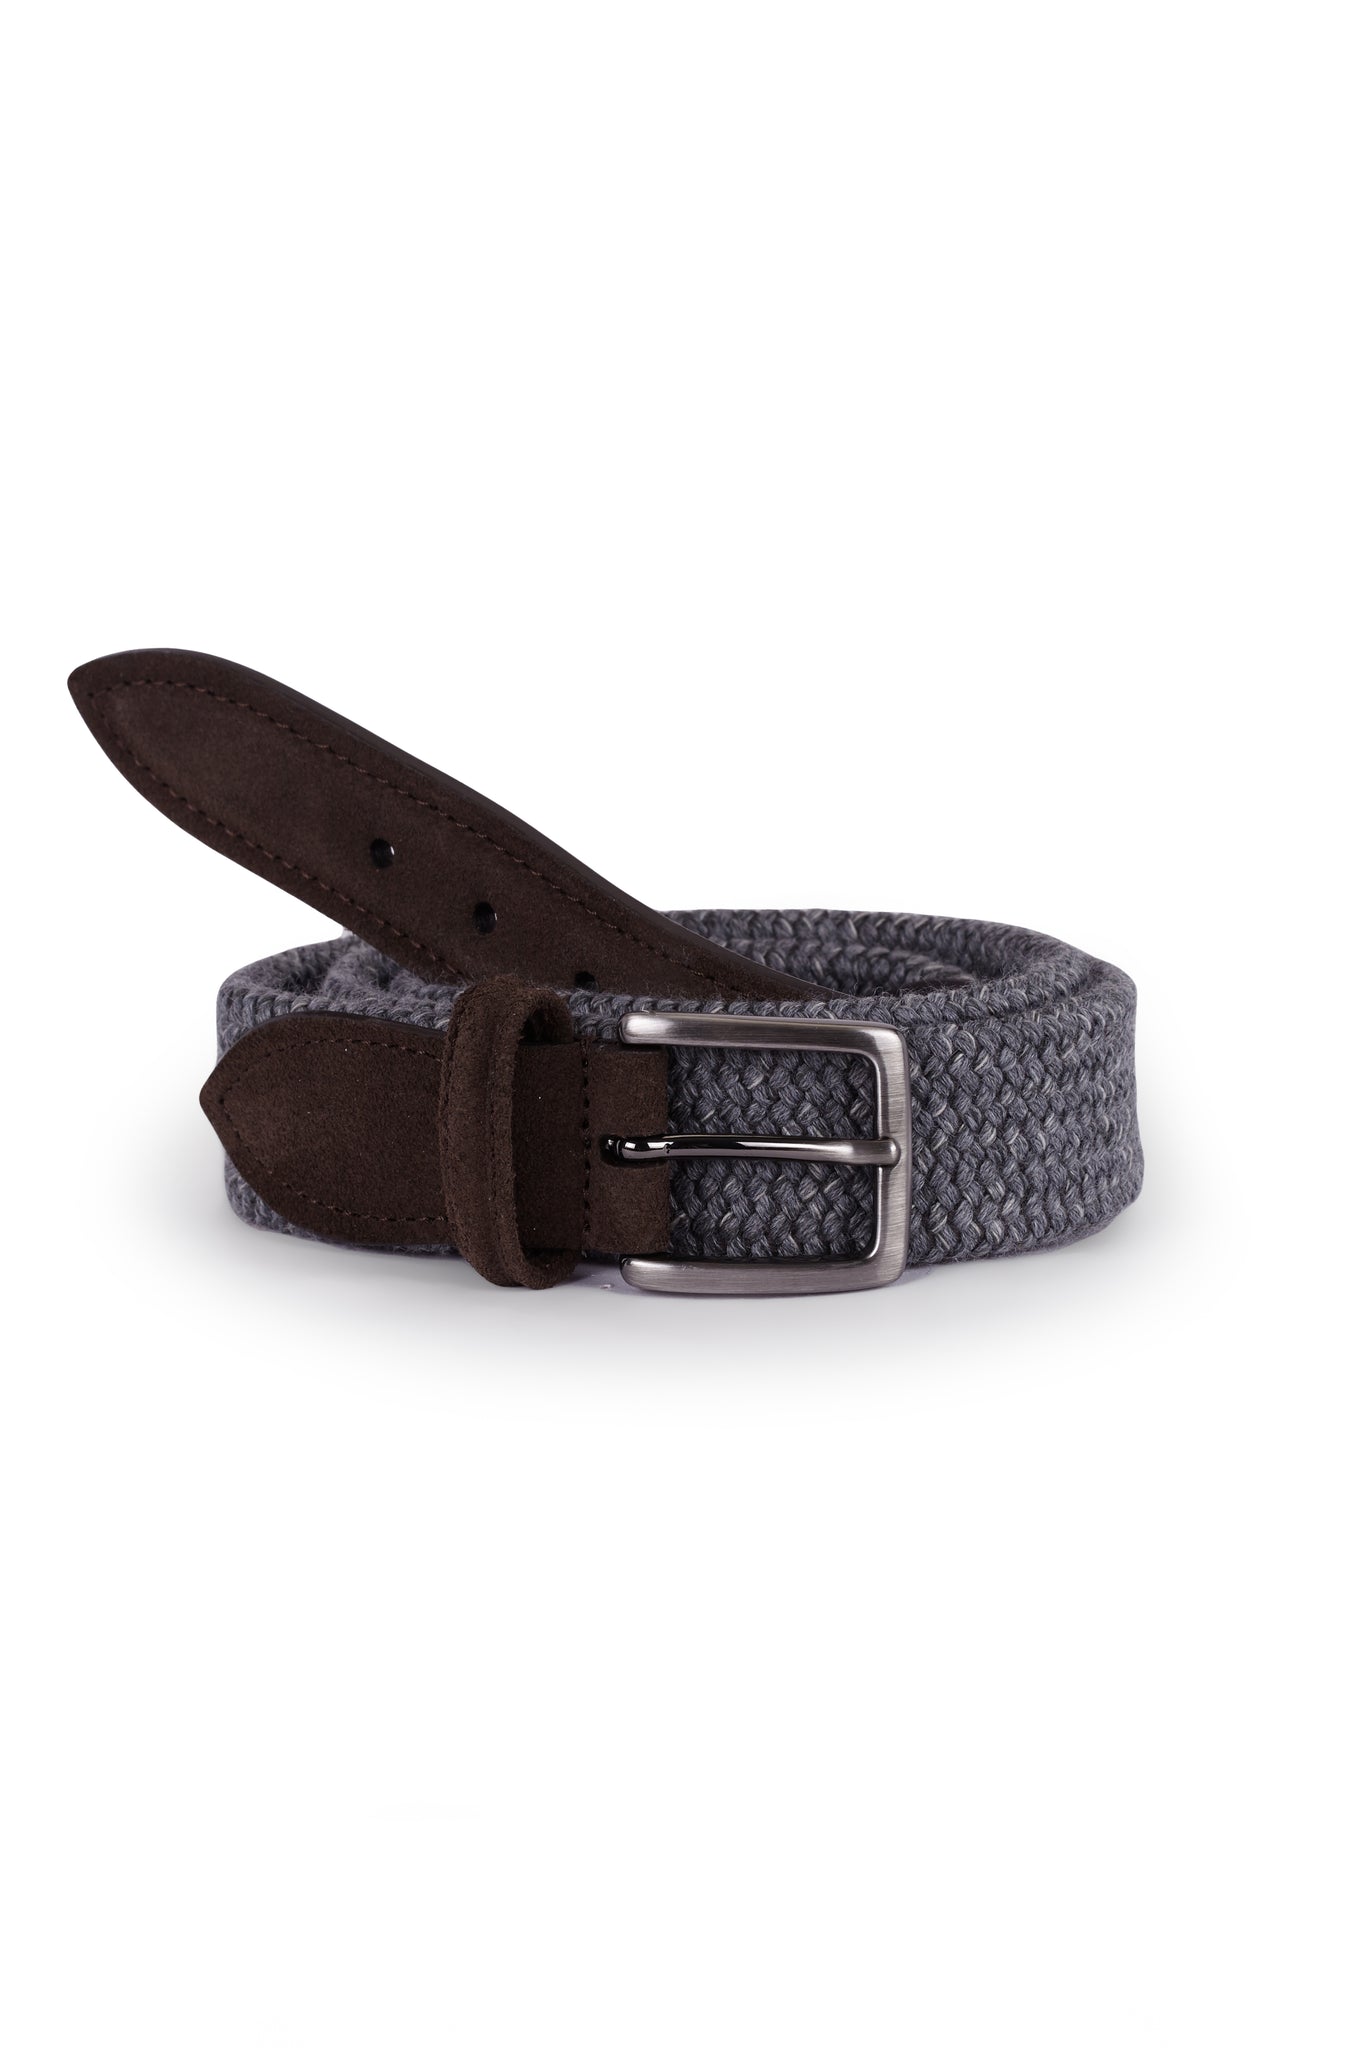 Wool braided belt